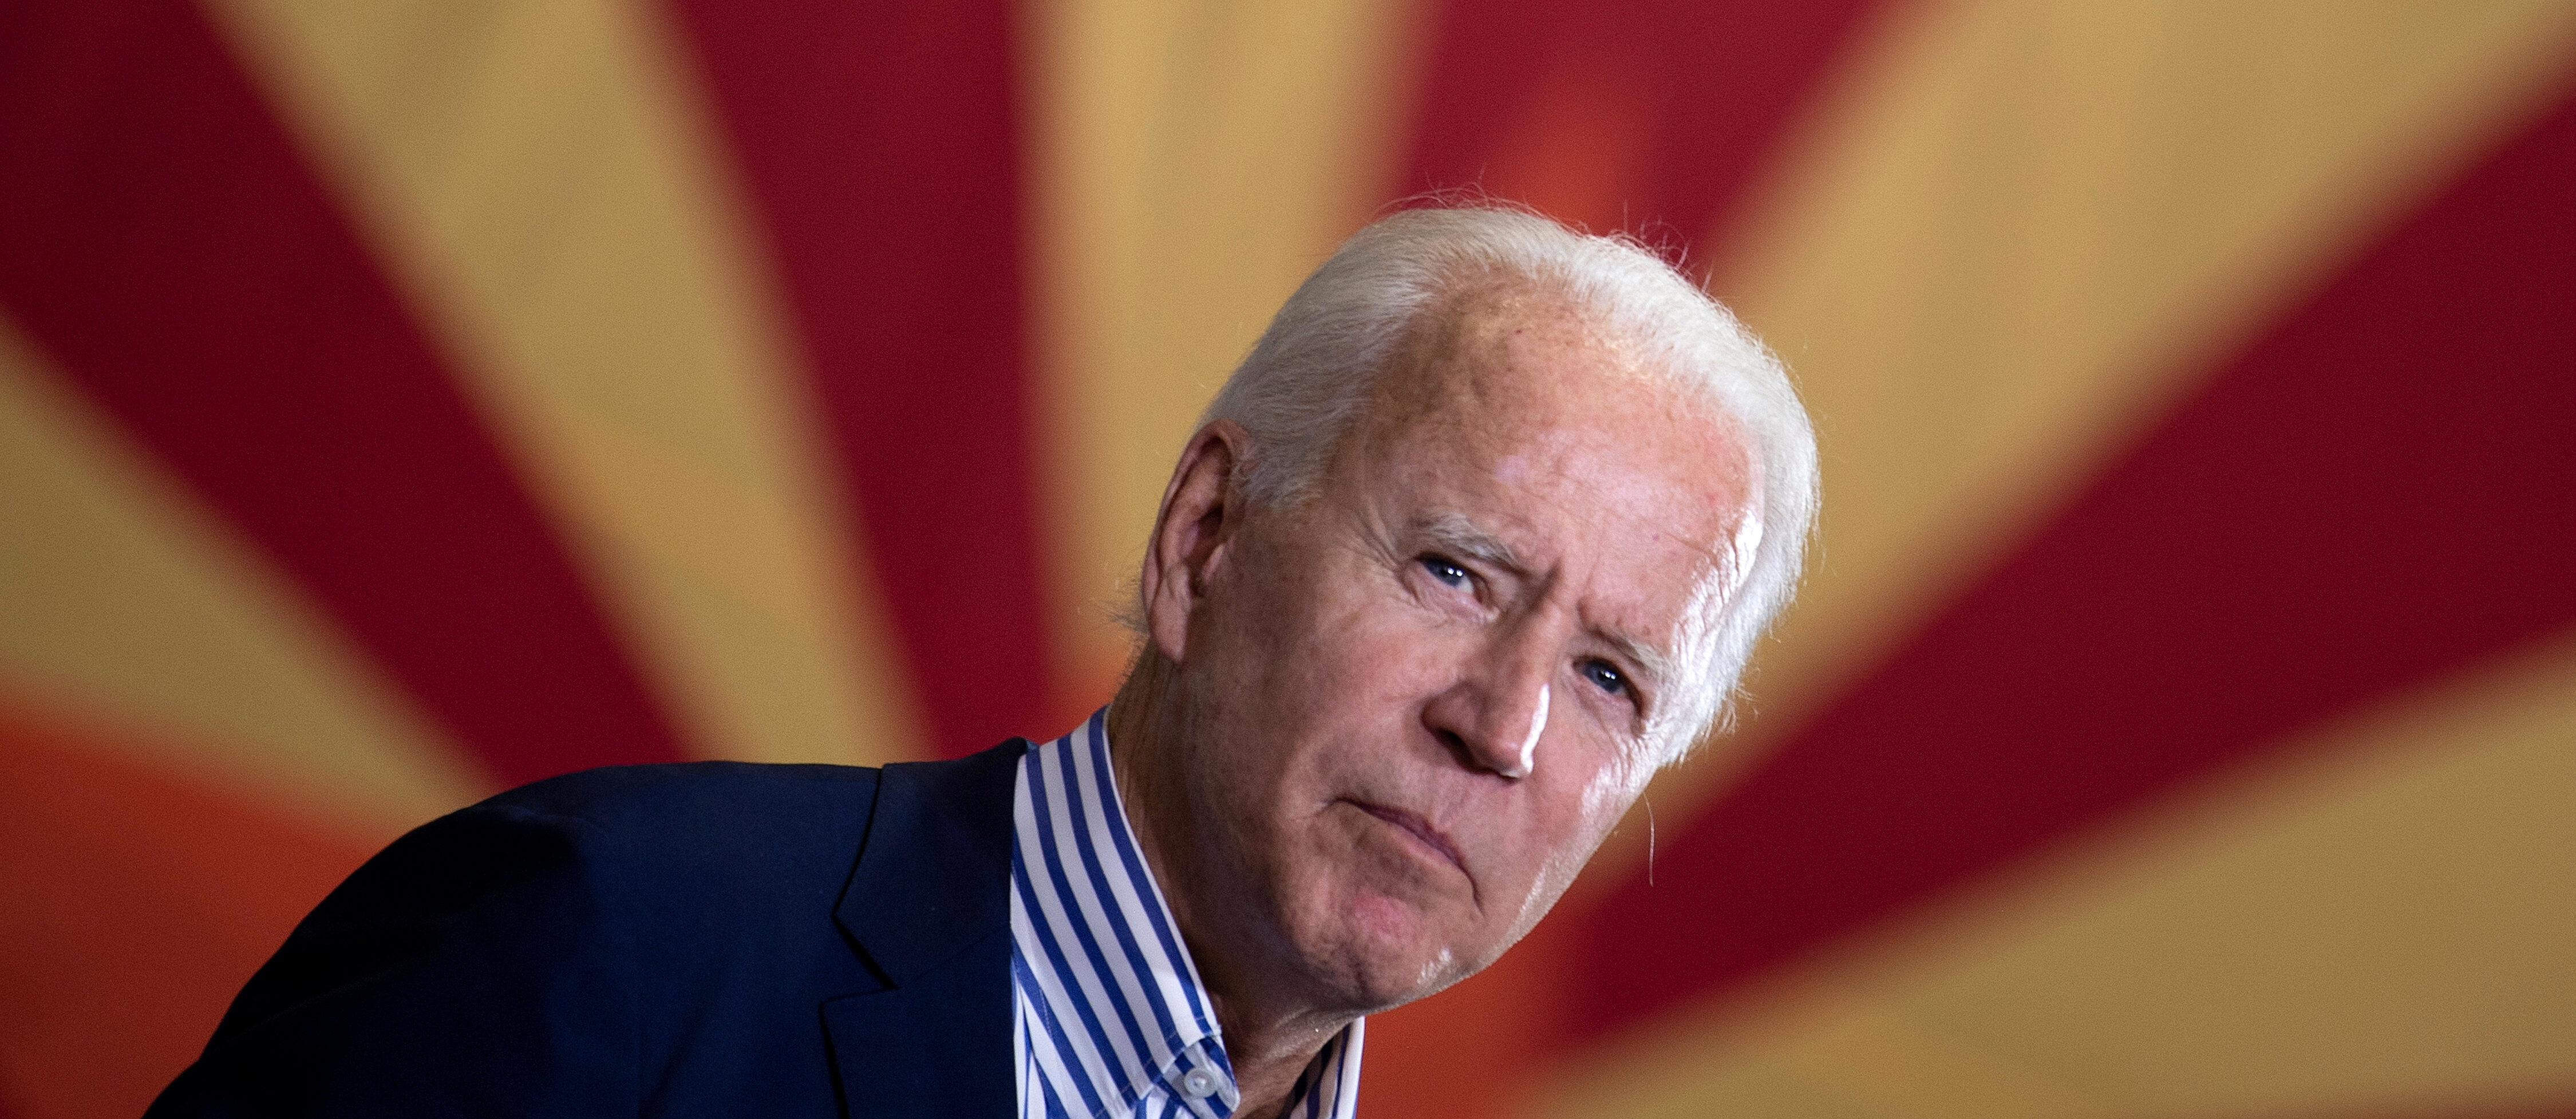 Joe Biden, fox news, ligt onder vuur vanwege opmars Taliban, president, amerika, abortus, roe v wade